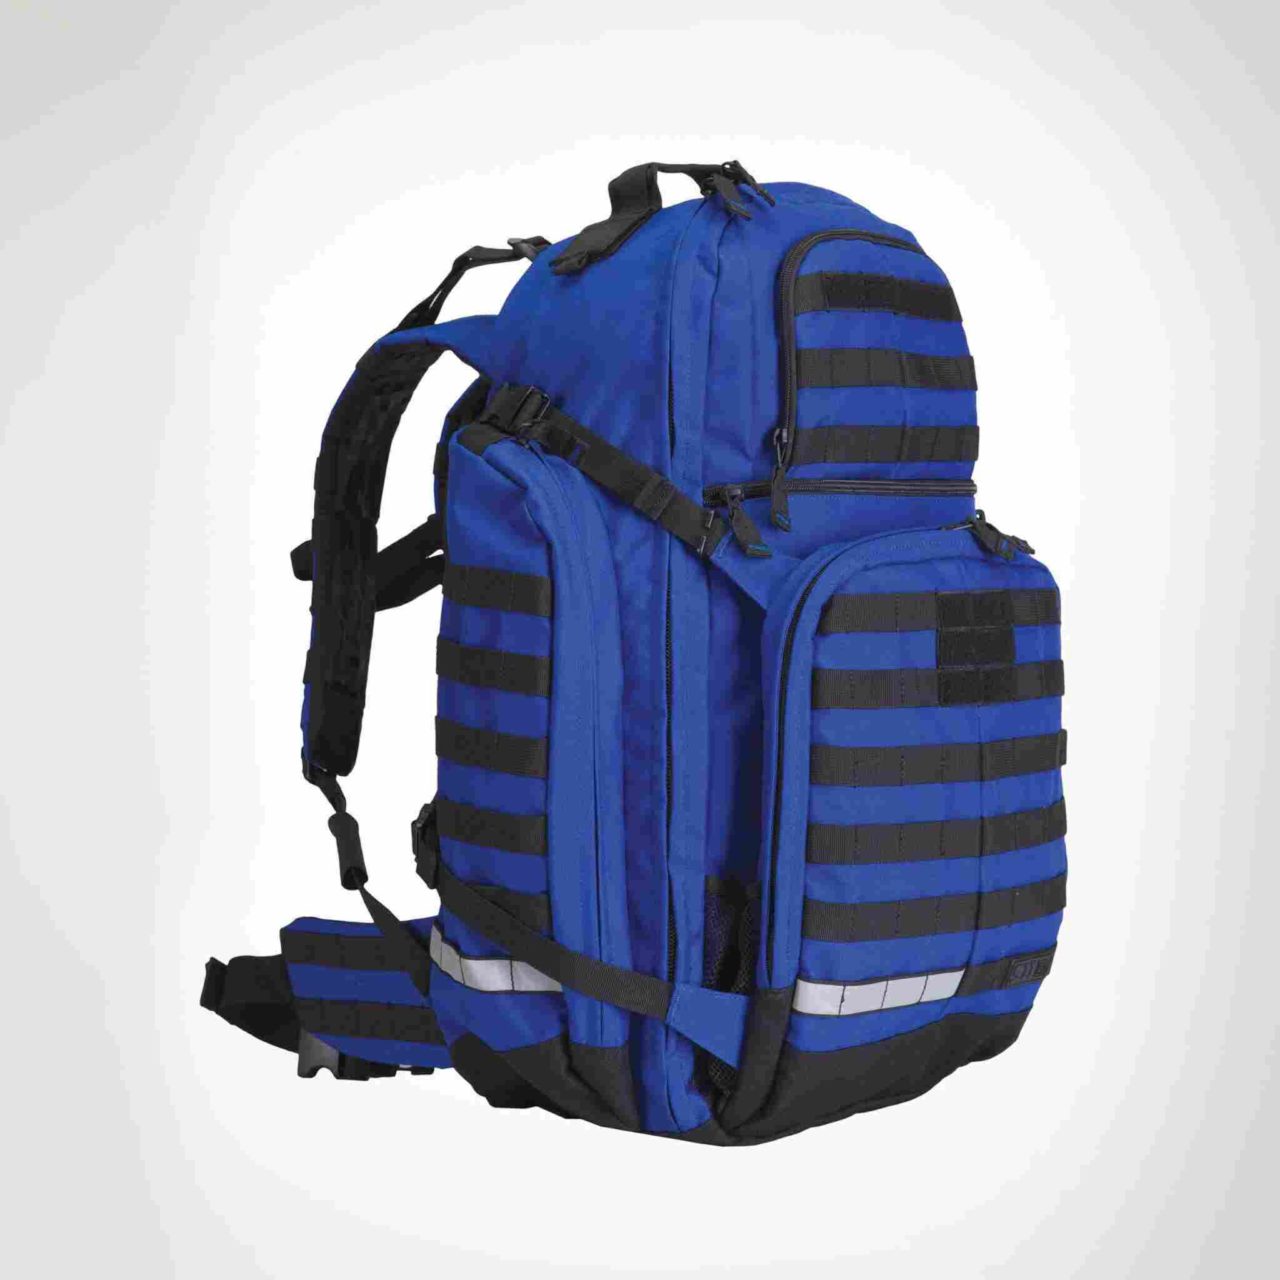 product-backpack-blue-1280x1280.jpg